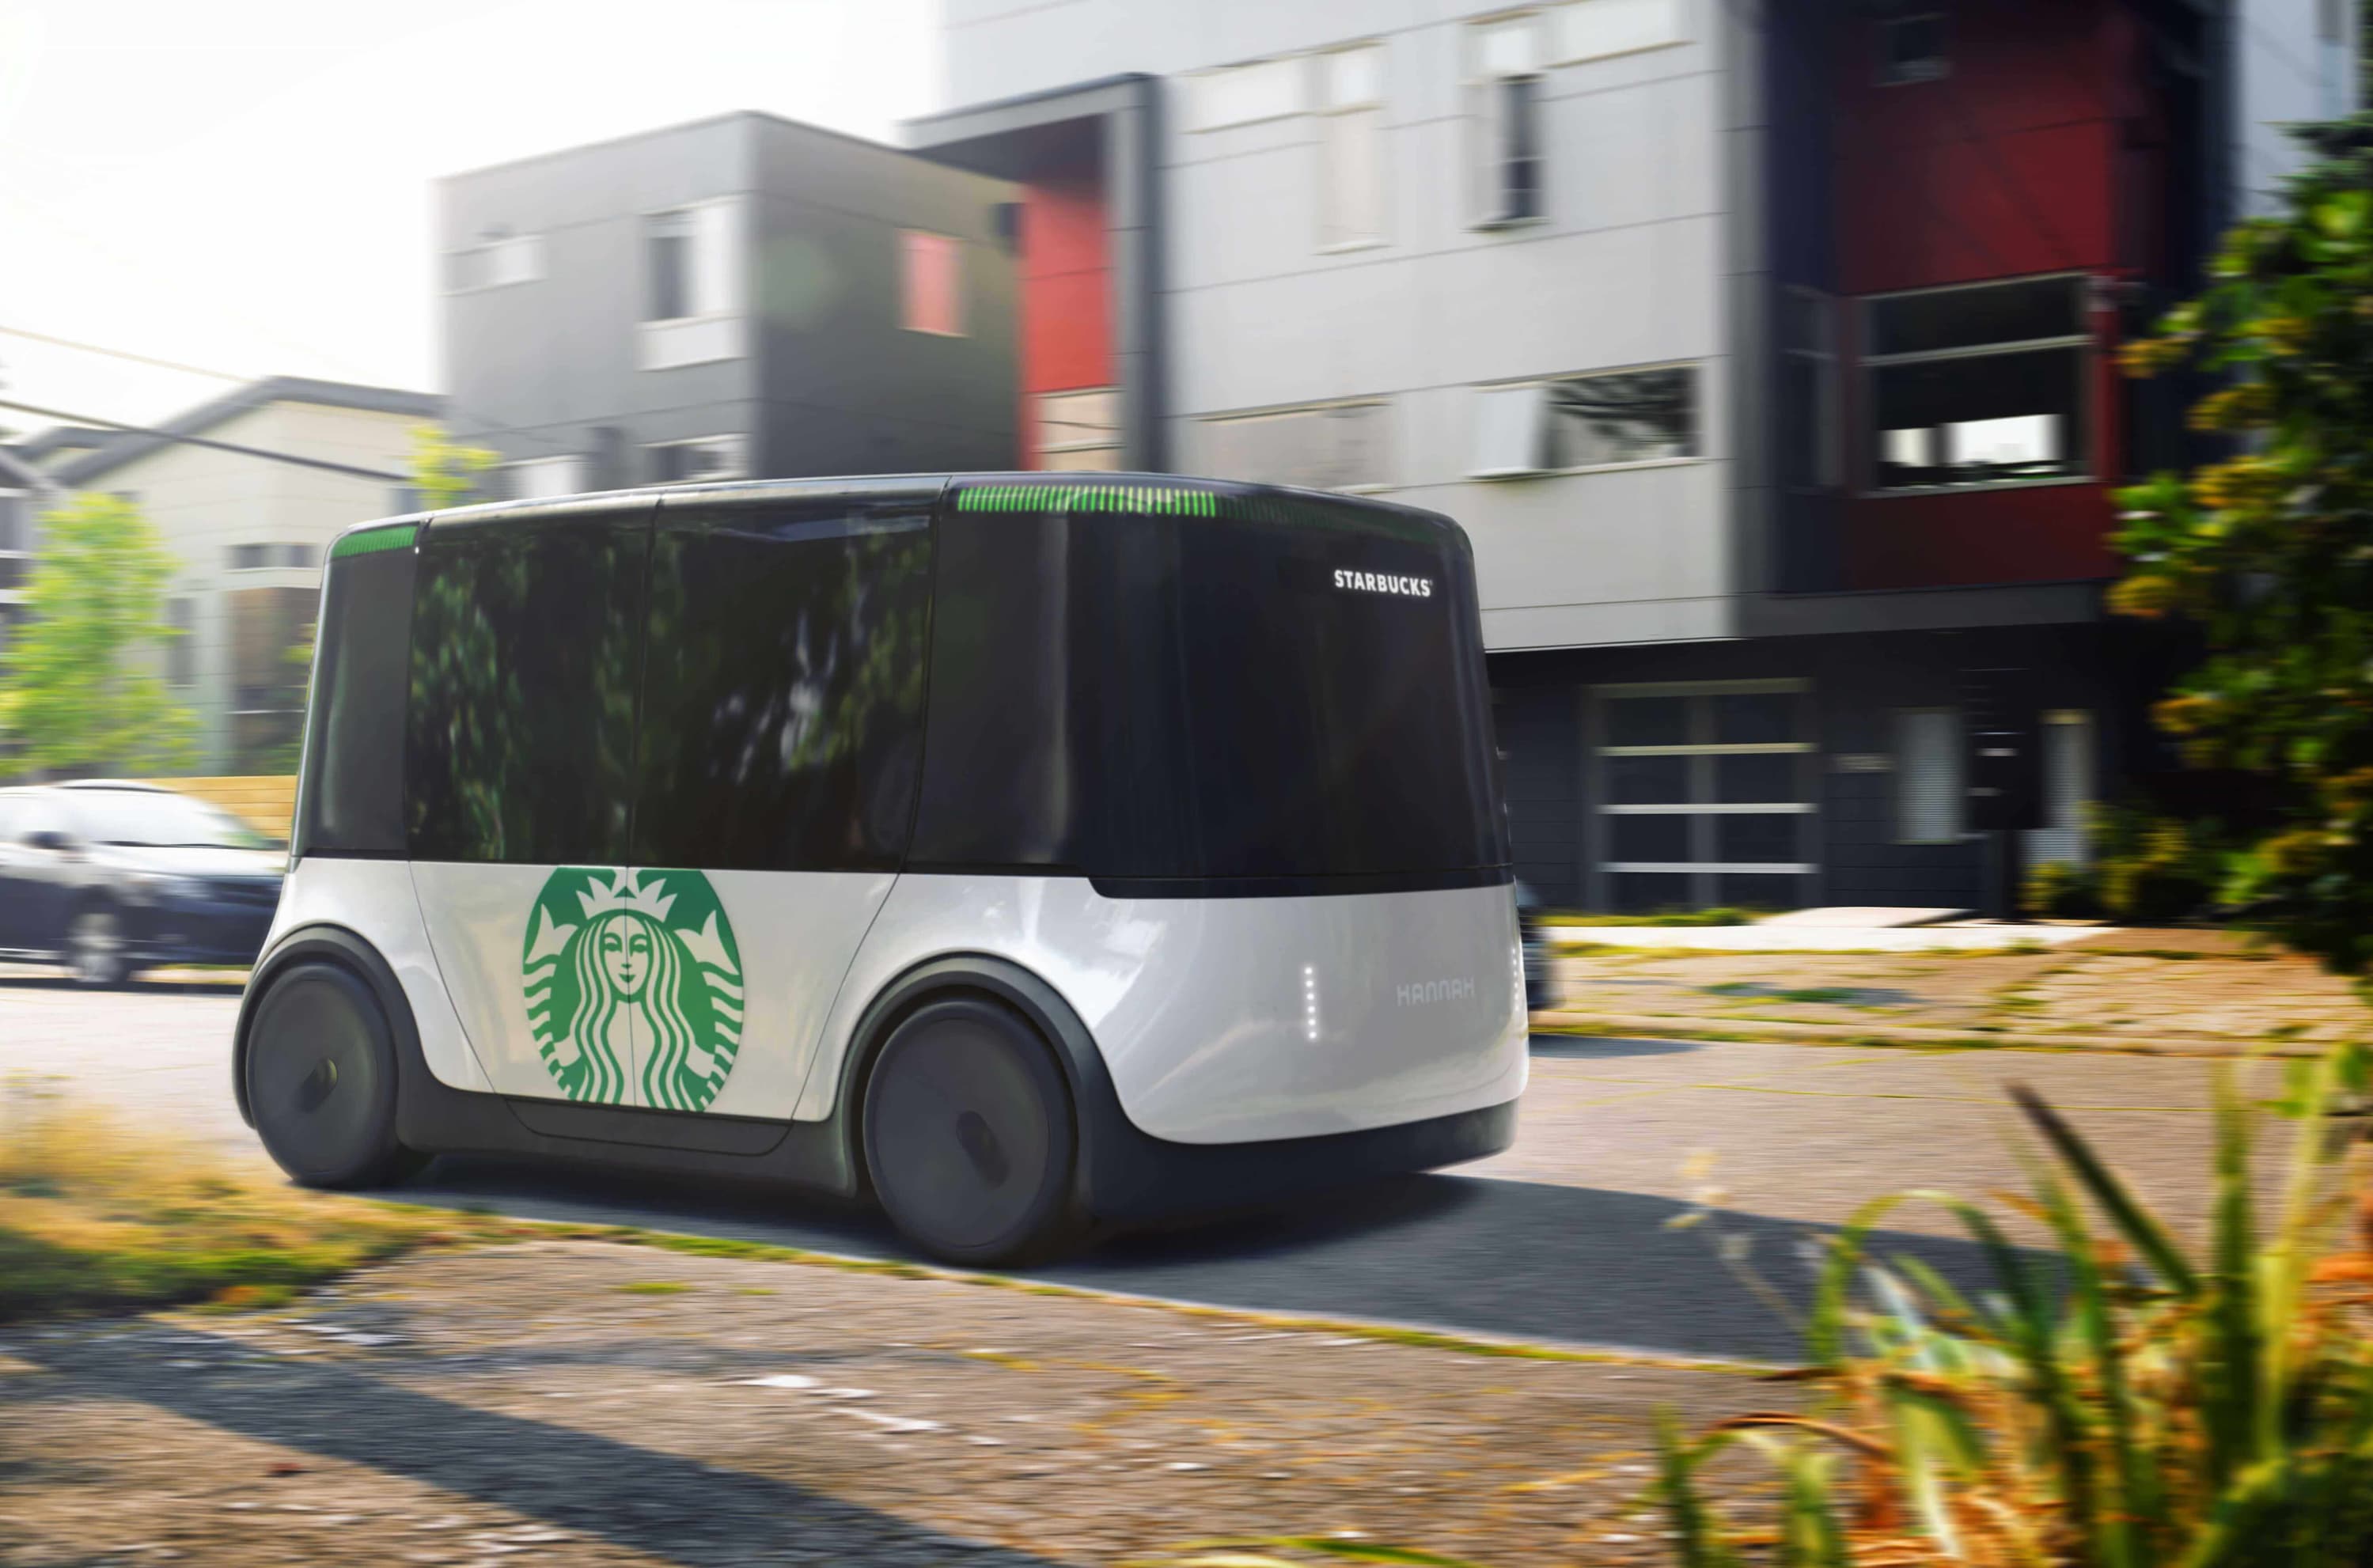 Hannah autonomous school bus with Starbucks branding